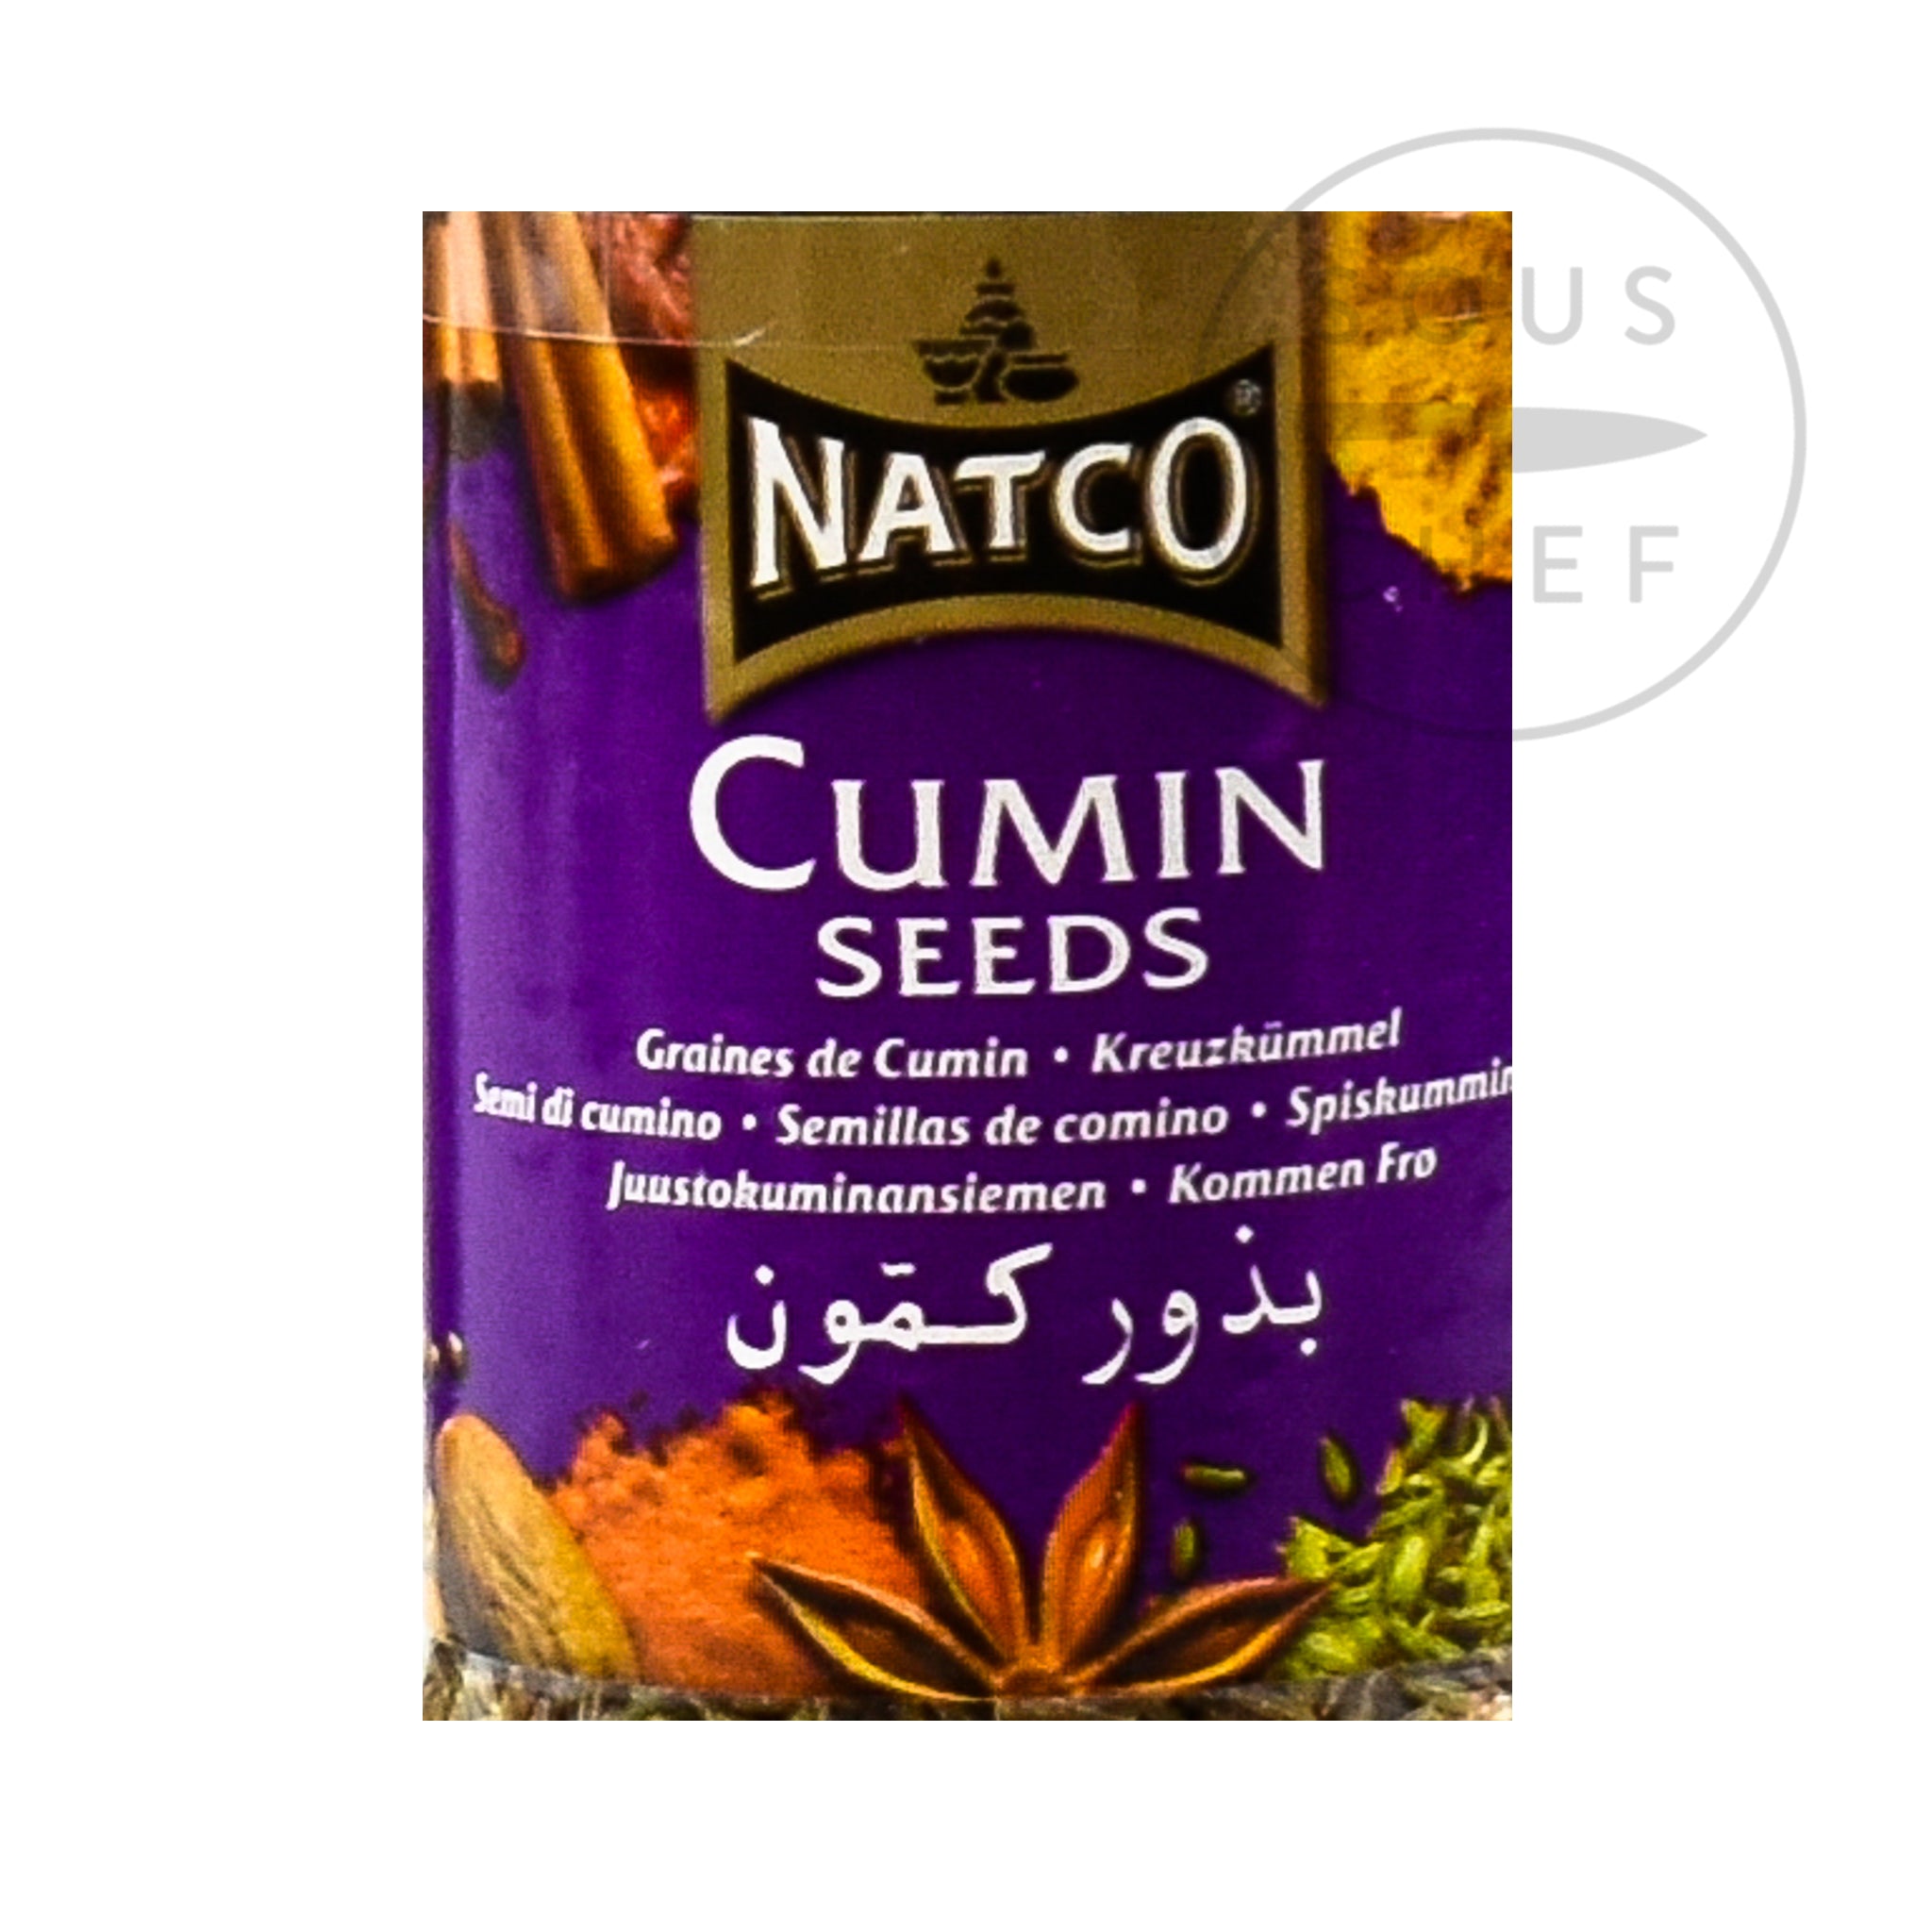 Natco Cumin Seeds, 100g